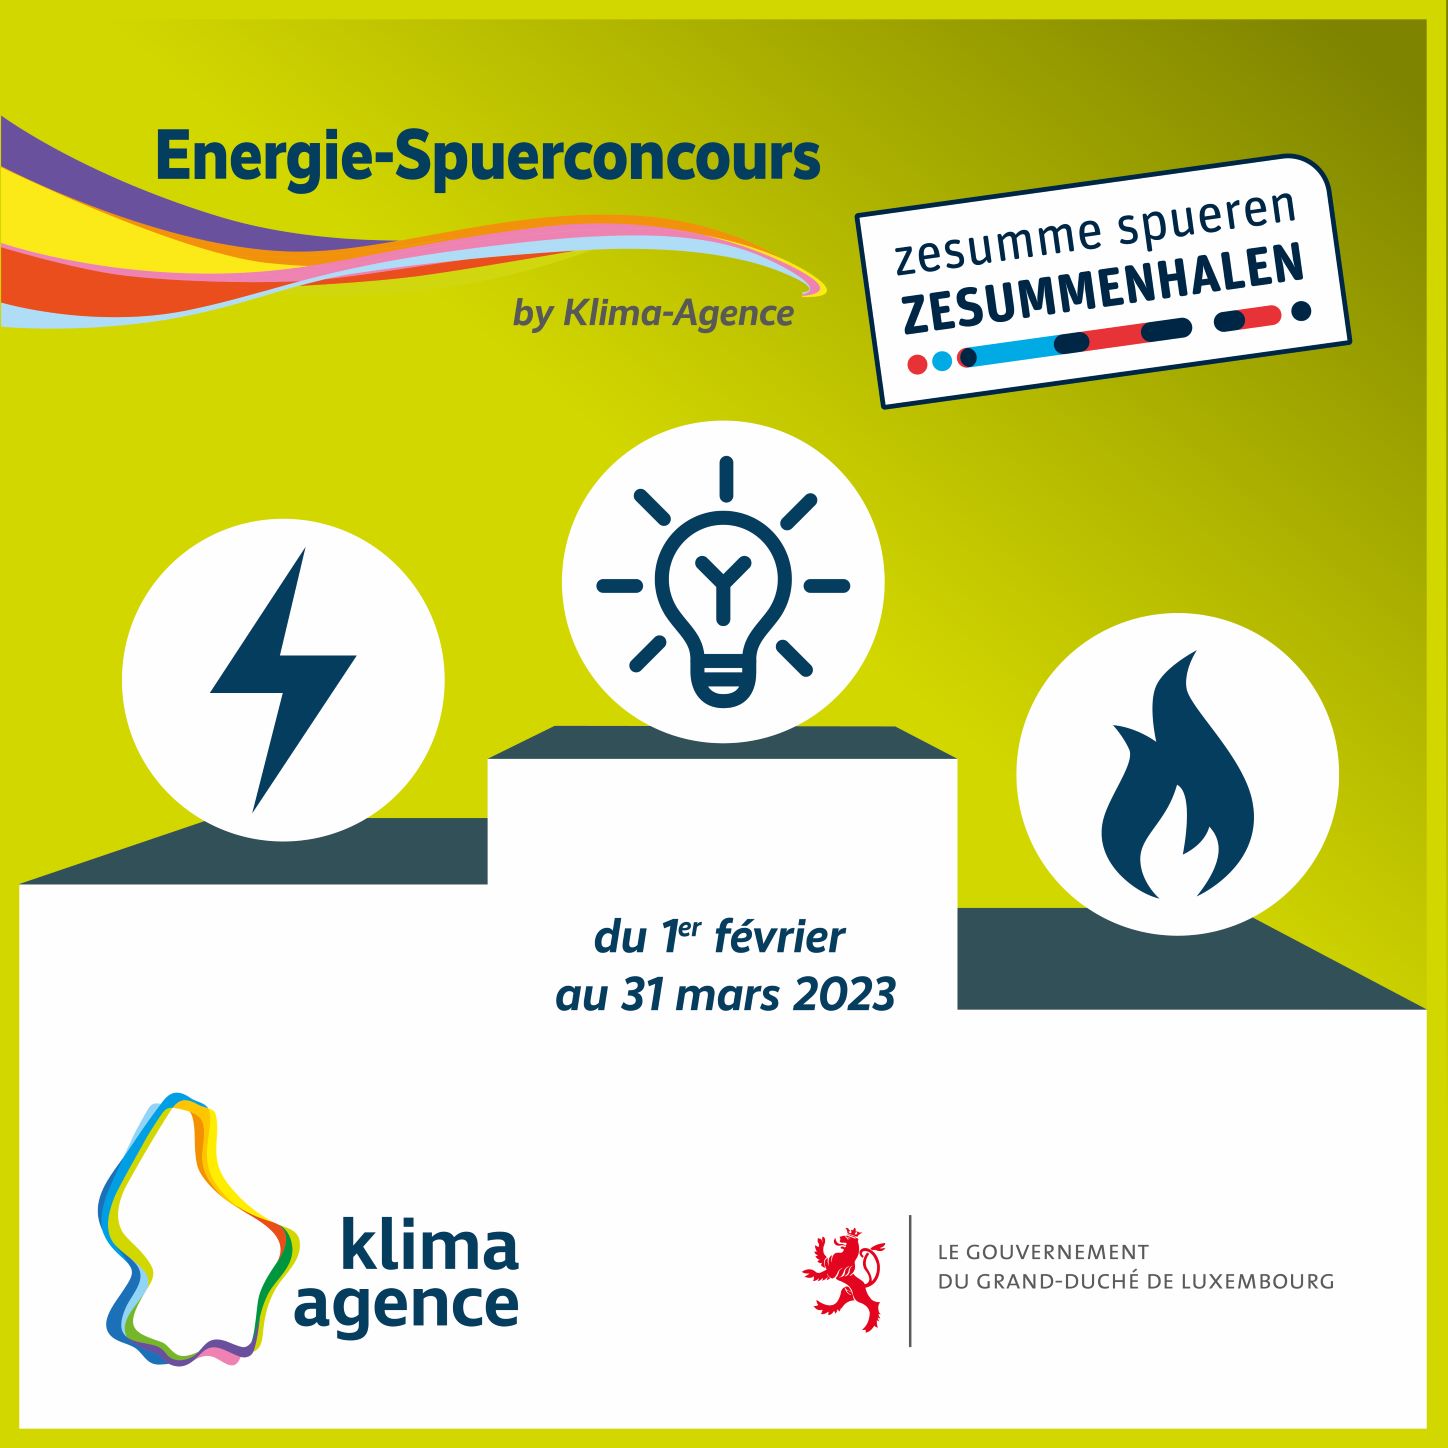 Energie-Spuerconcours 2023 vun der Klima-Agence